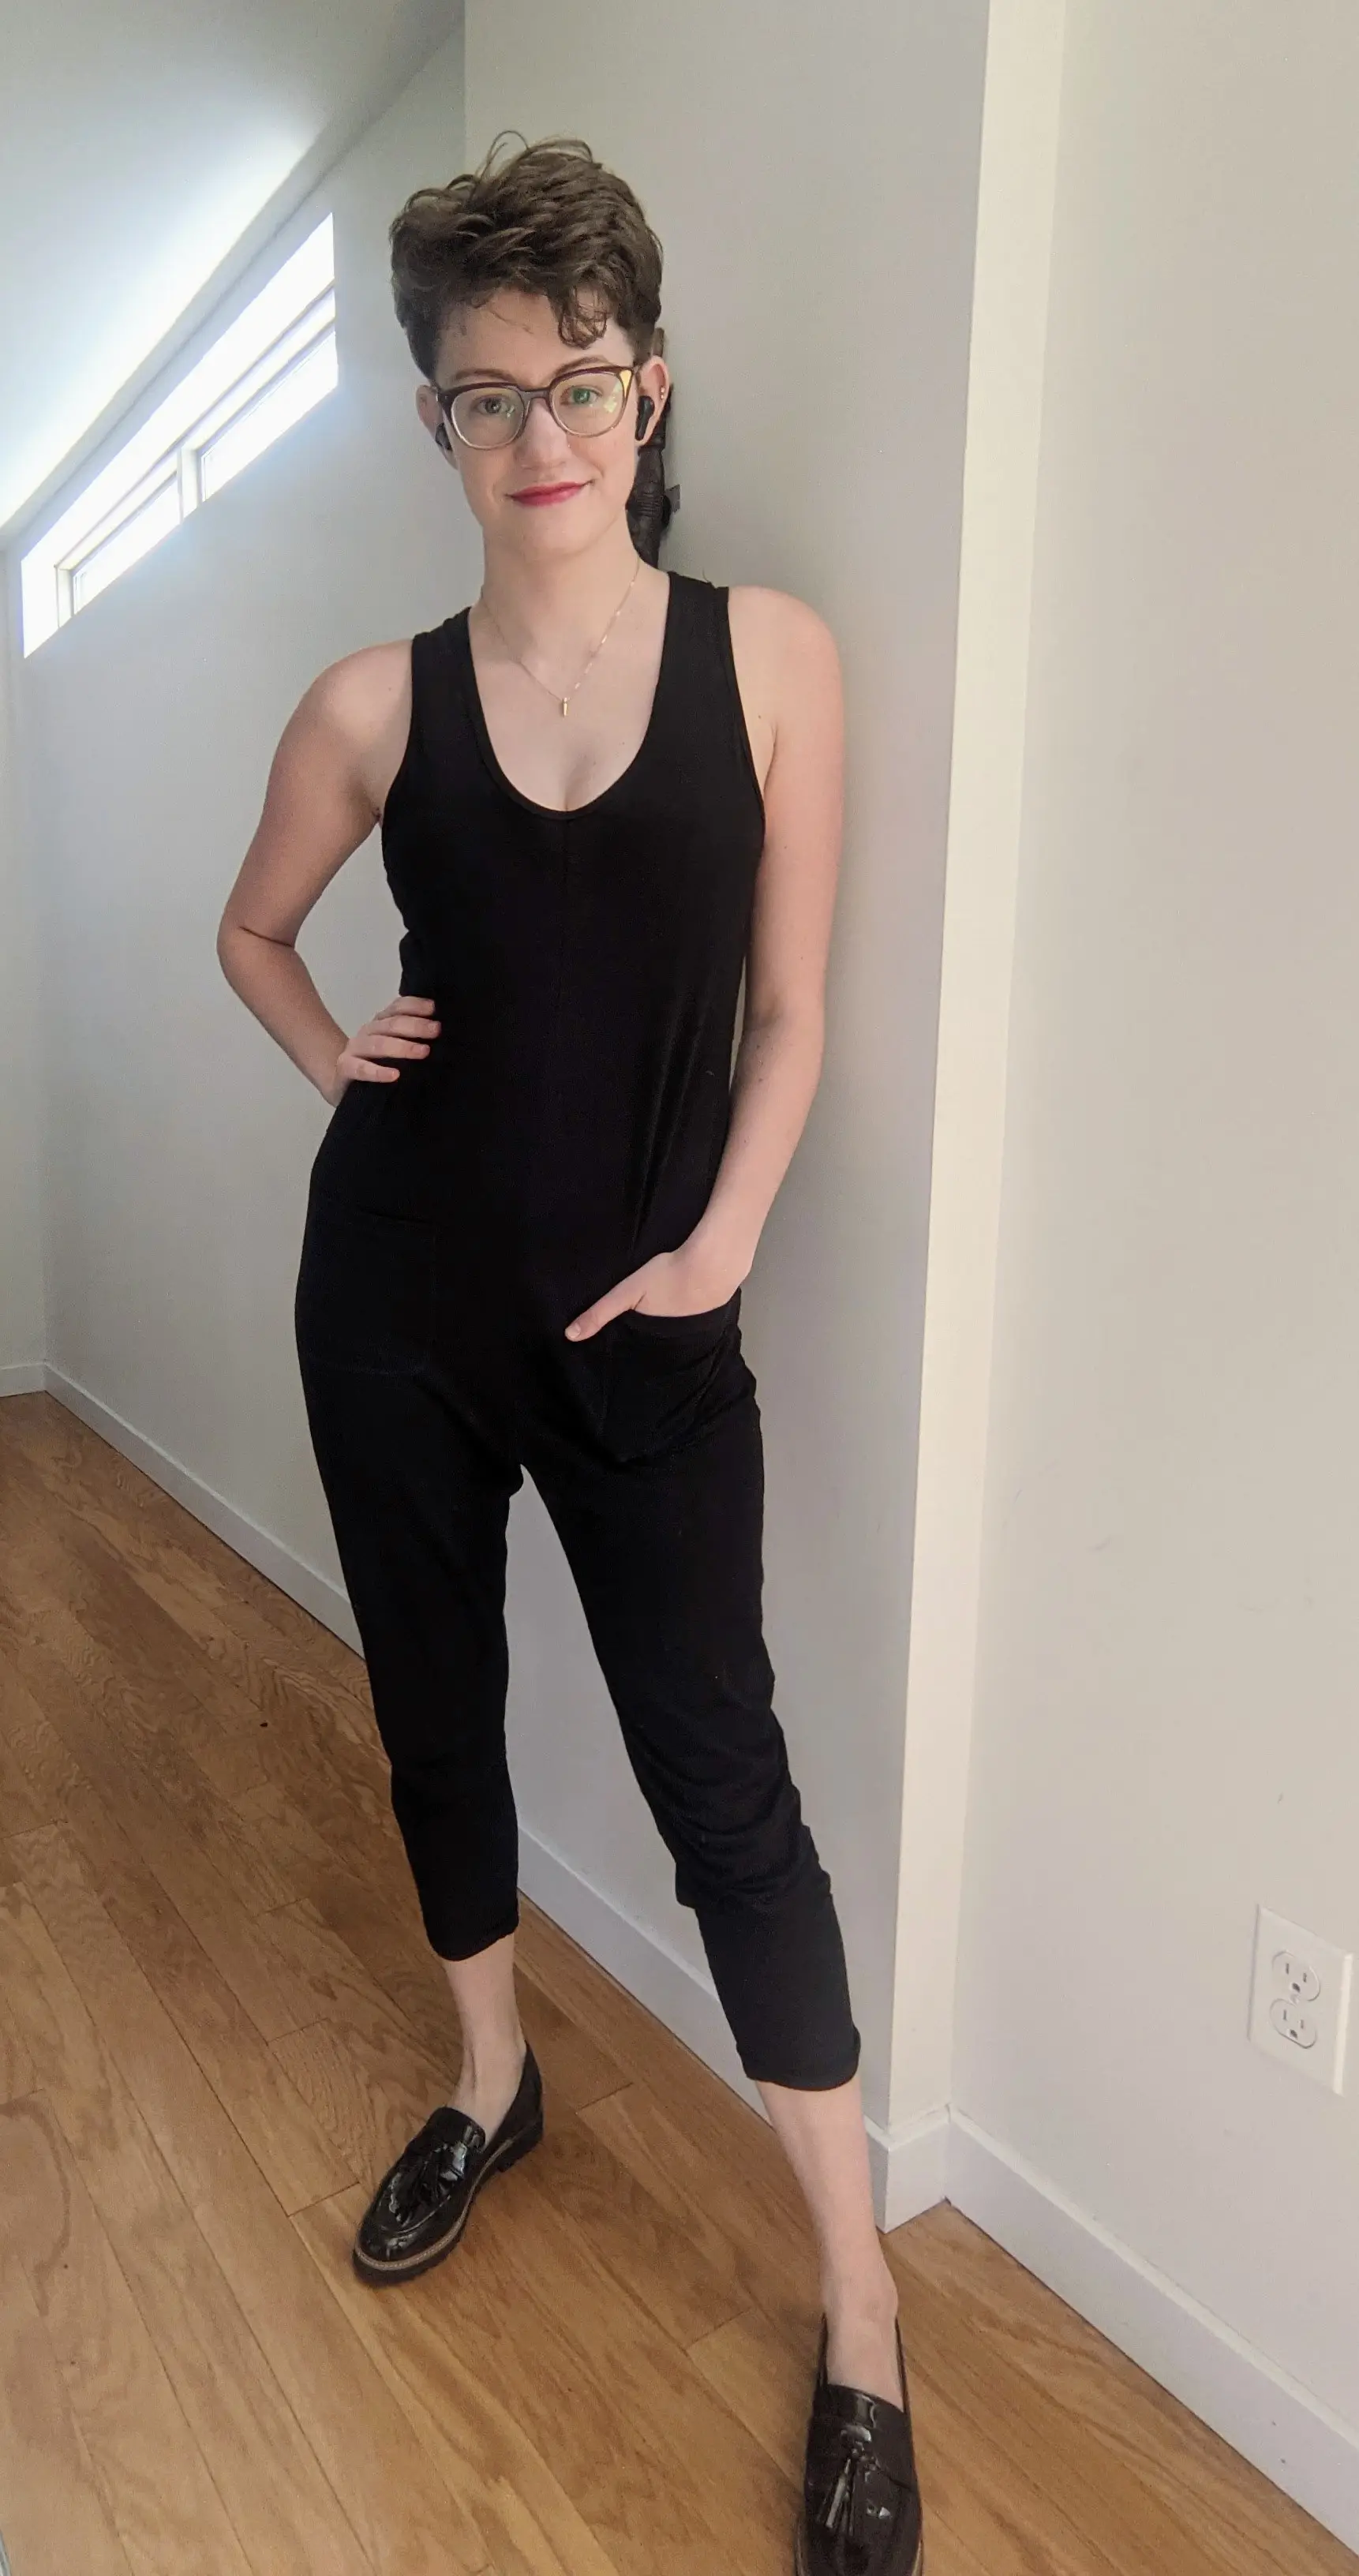 Danielle wearing a black sleeveless jumpsuit